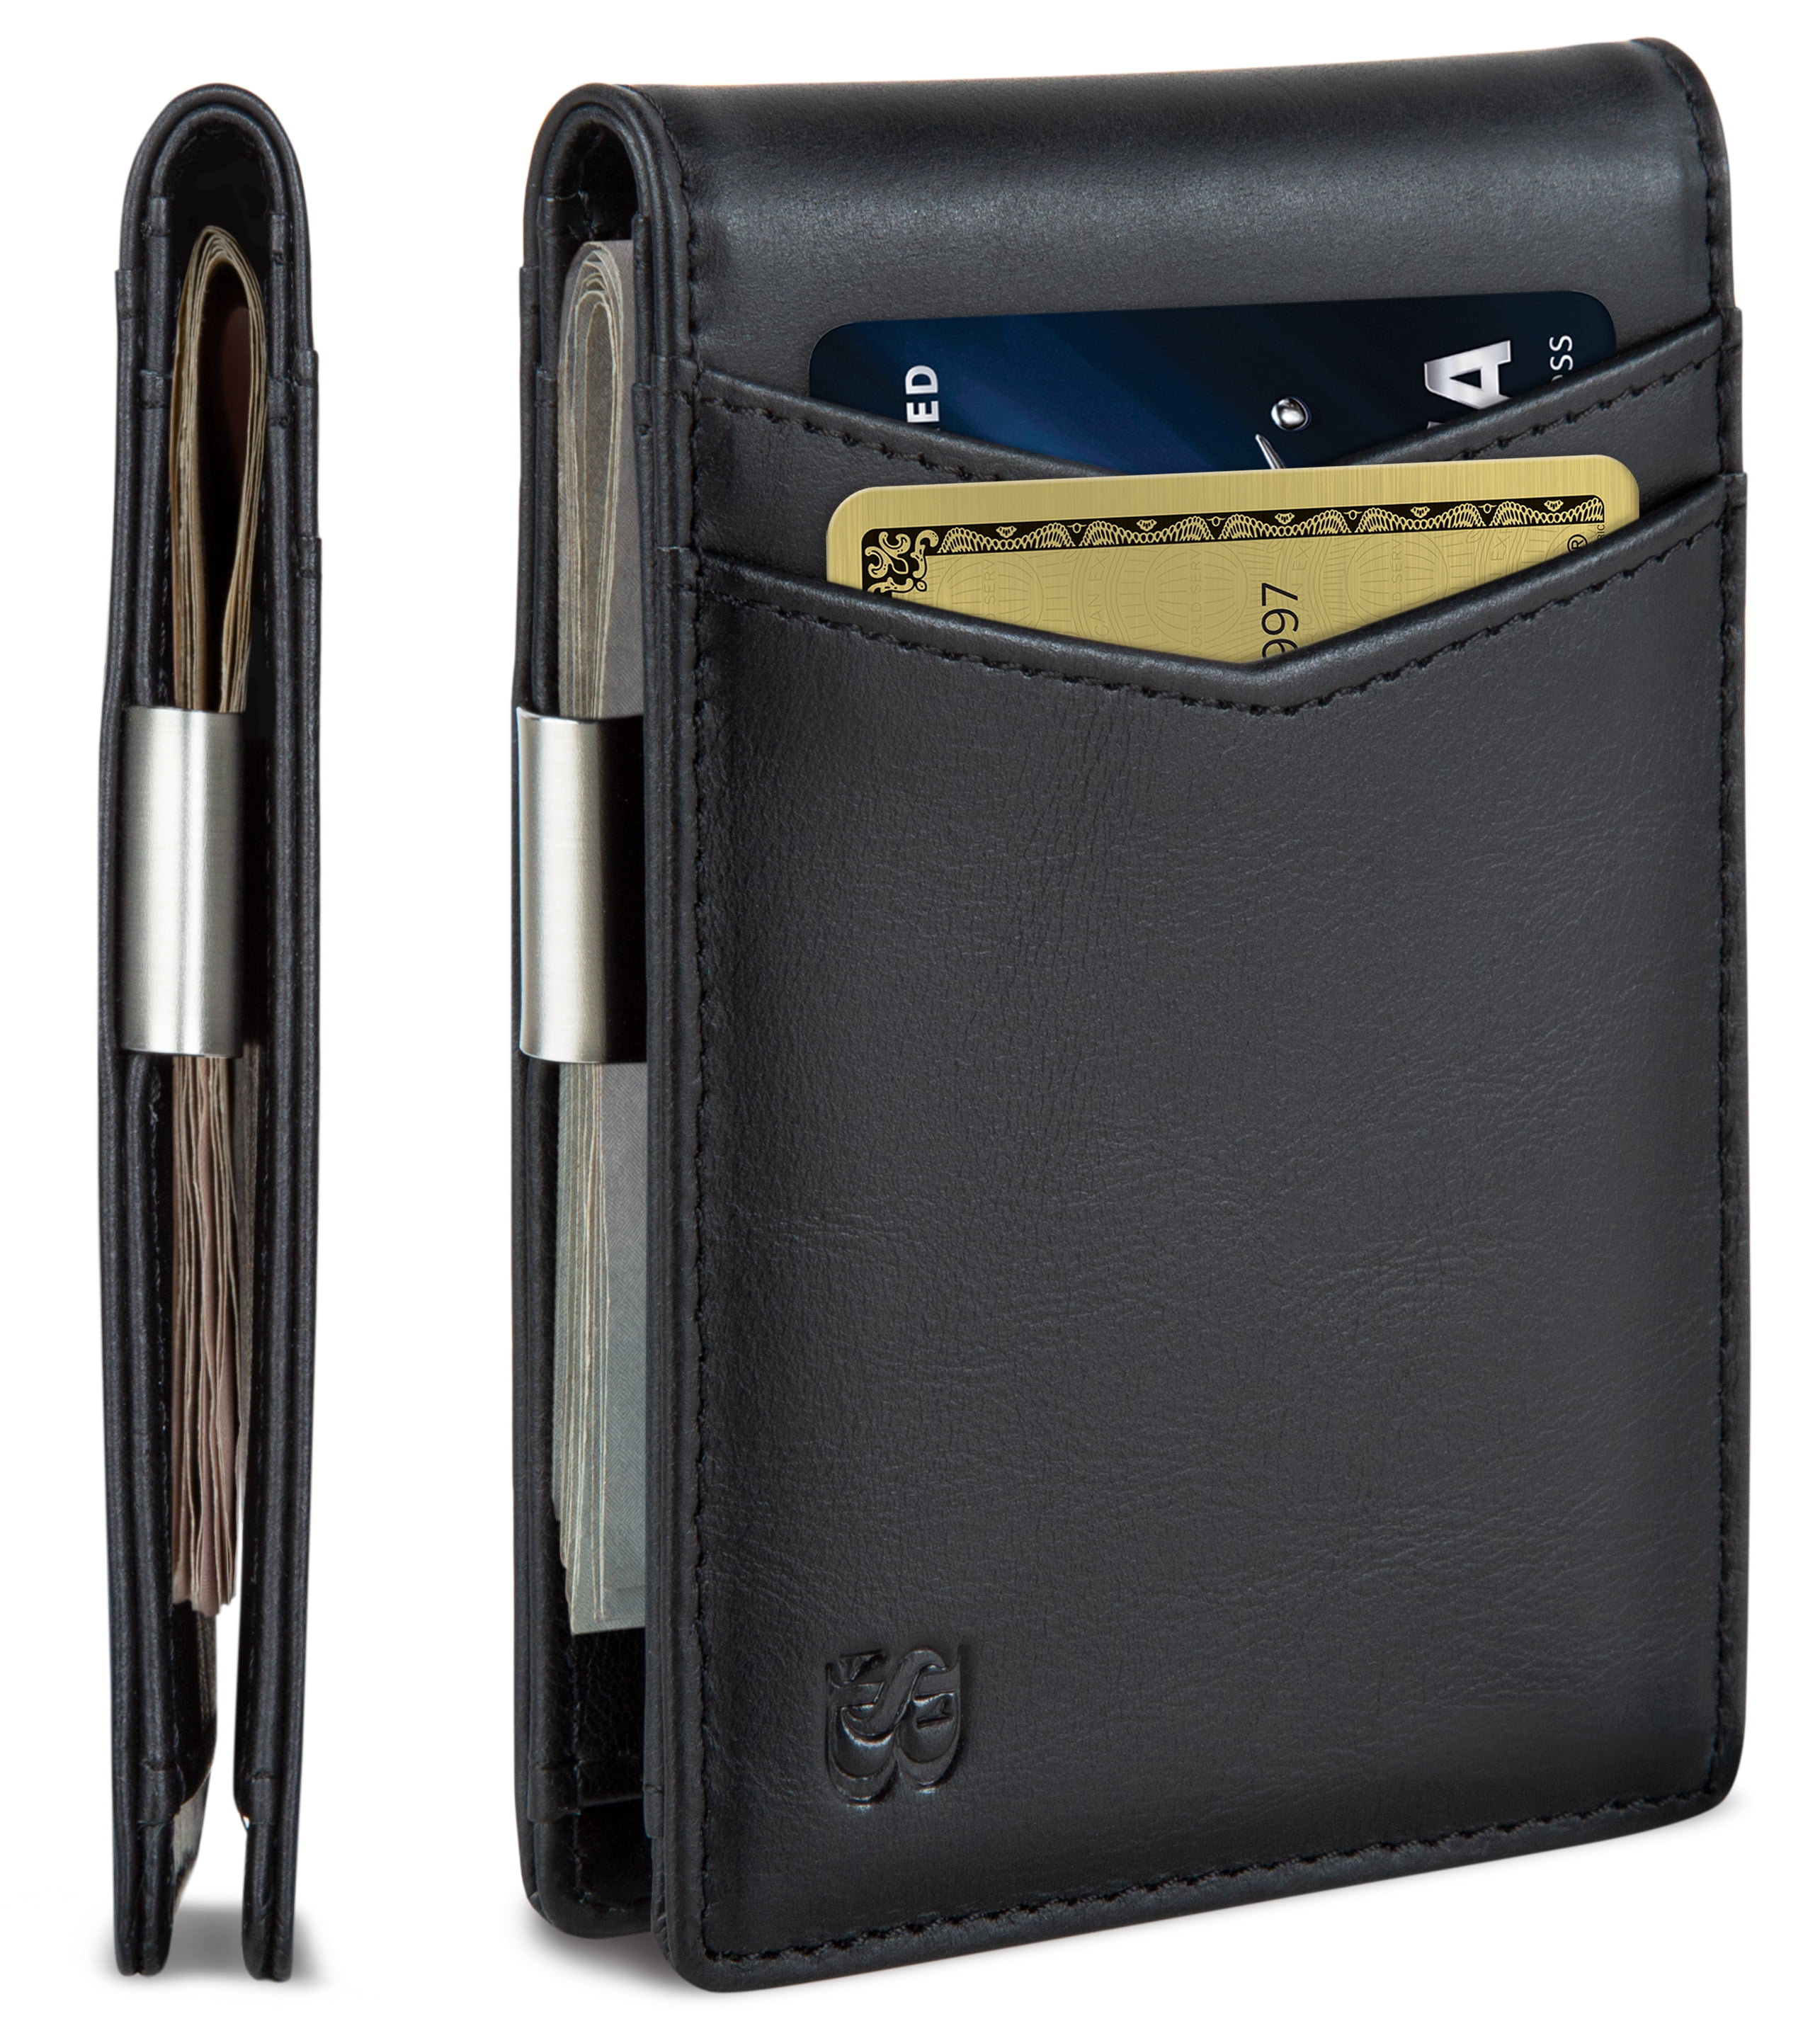 SERMAN BRANDS Front Pocket Wallet with Money Clip Magnetic. Bifold  Minimalist RFID Leather Wallets for Men Slim Card Wallet